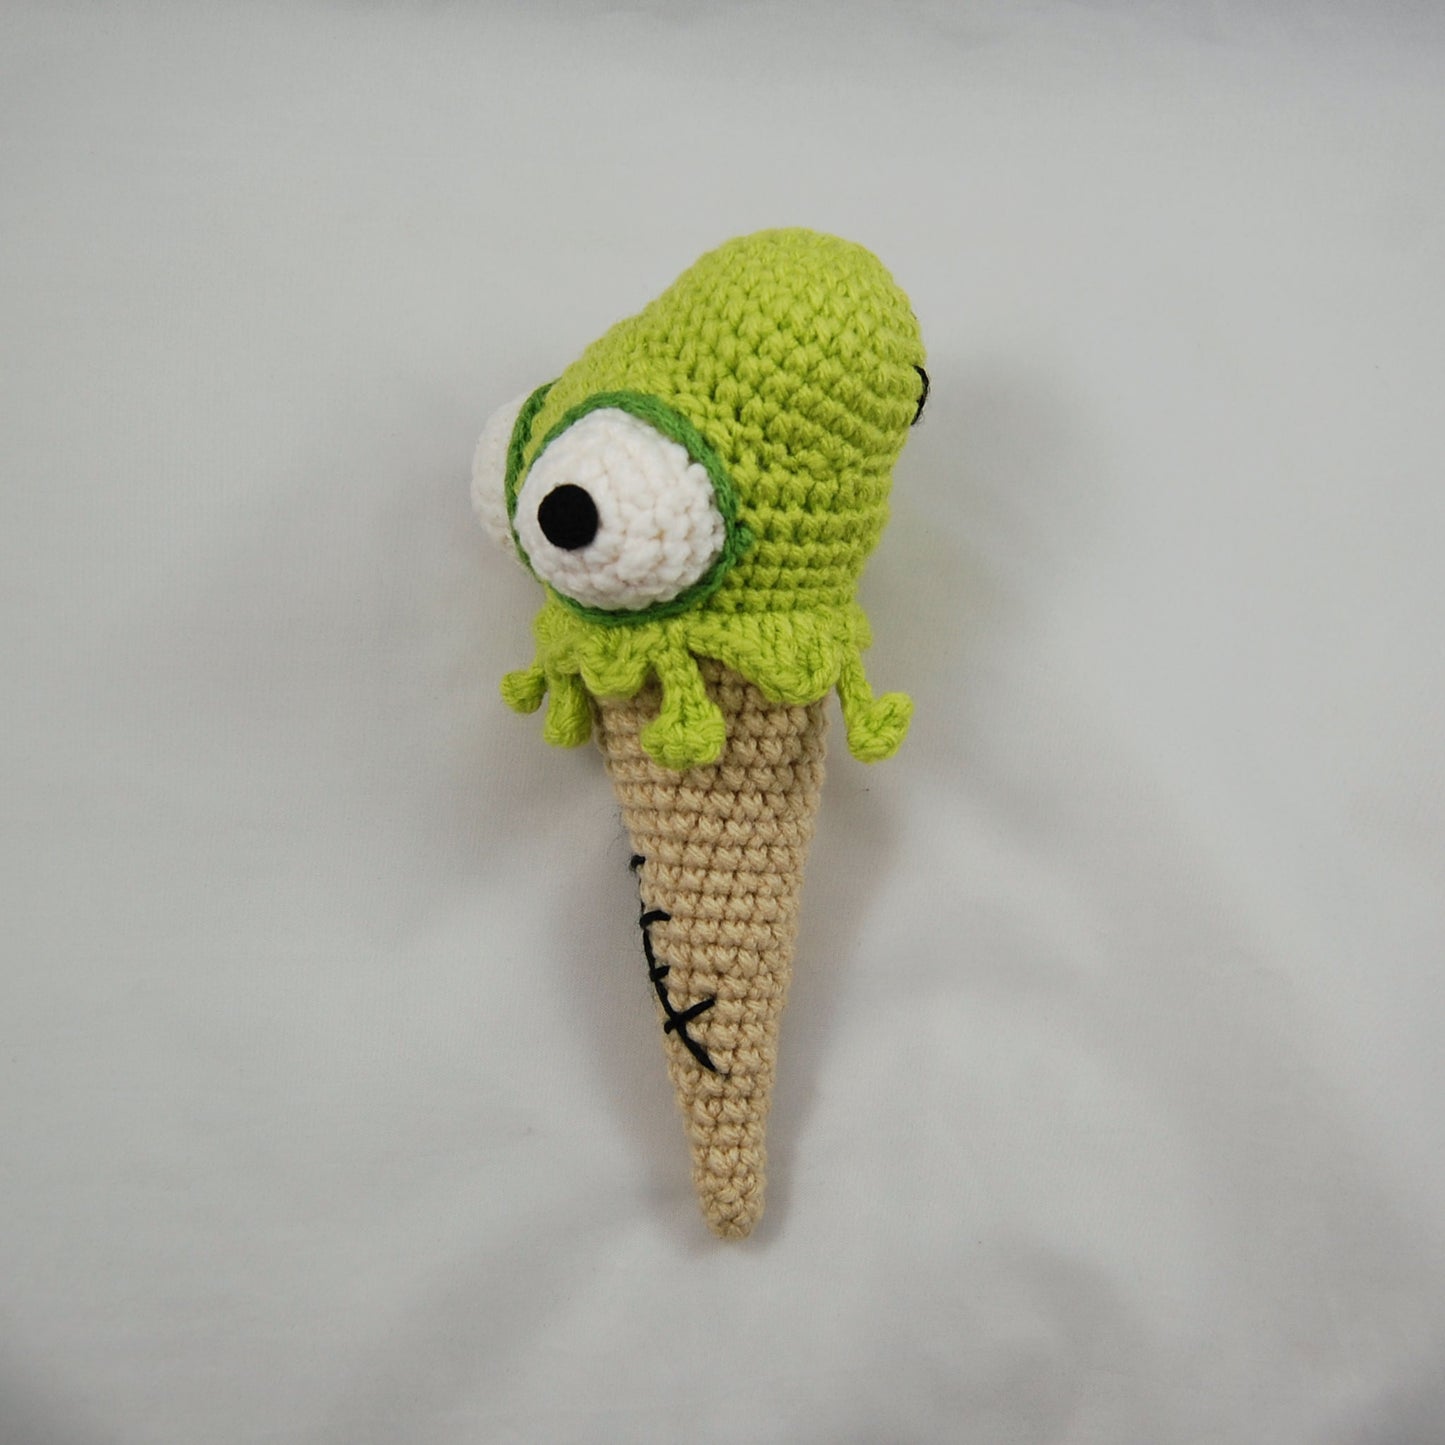 Ice Scream Cone Crochet Pattern